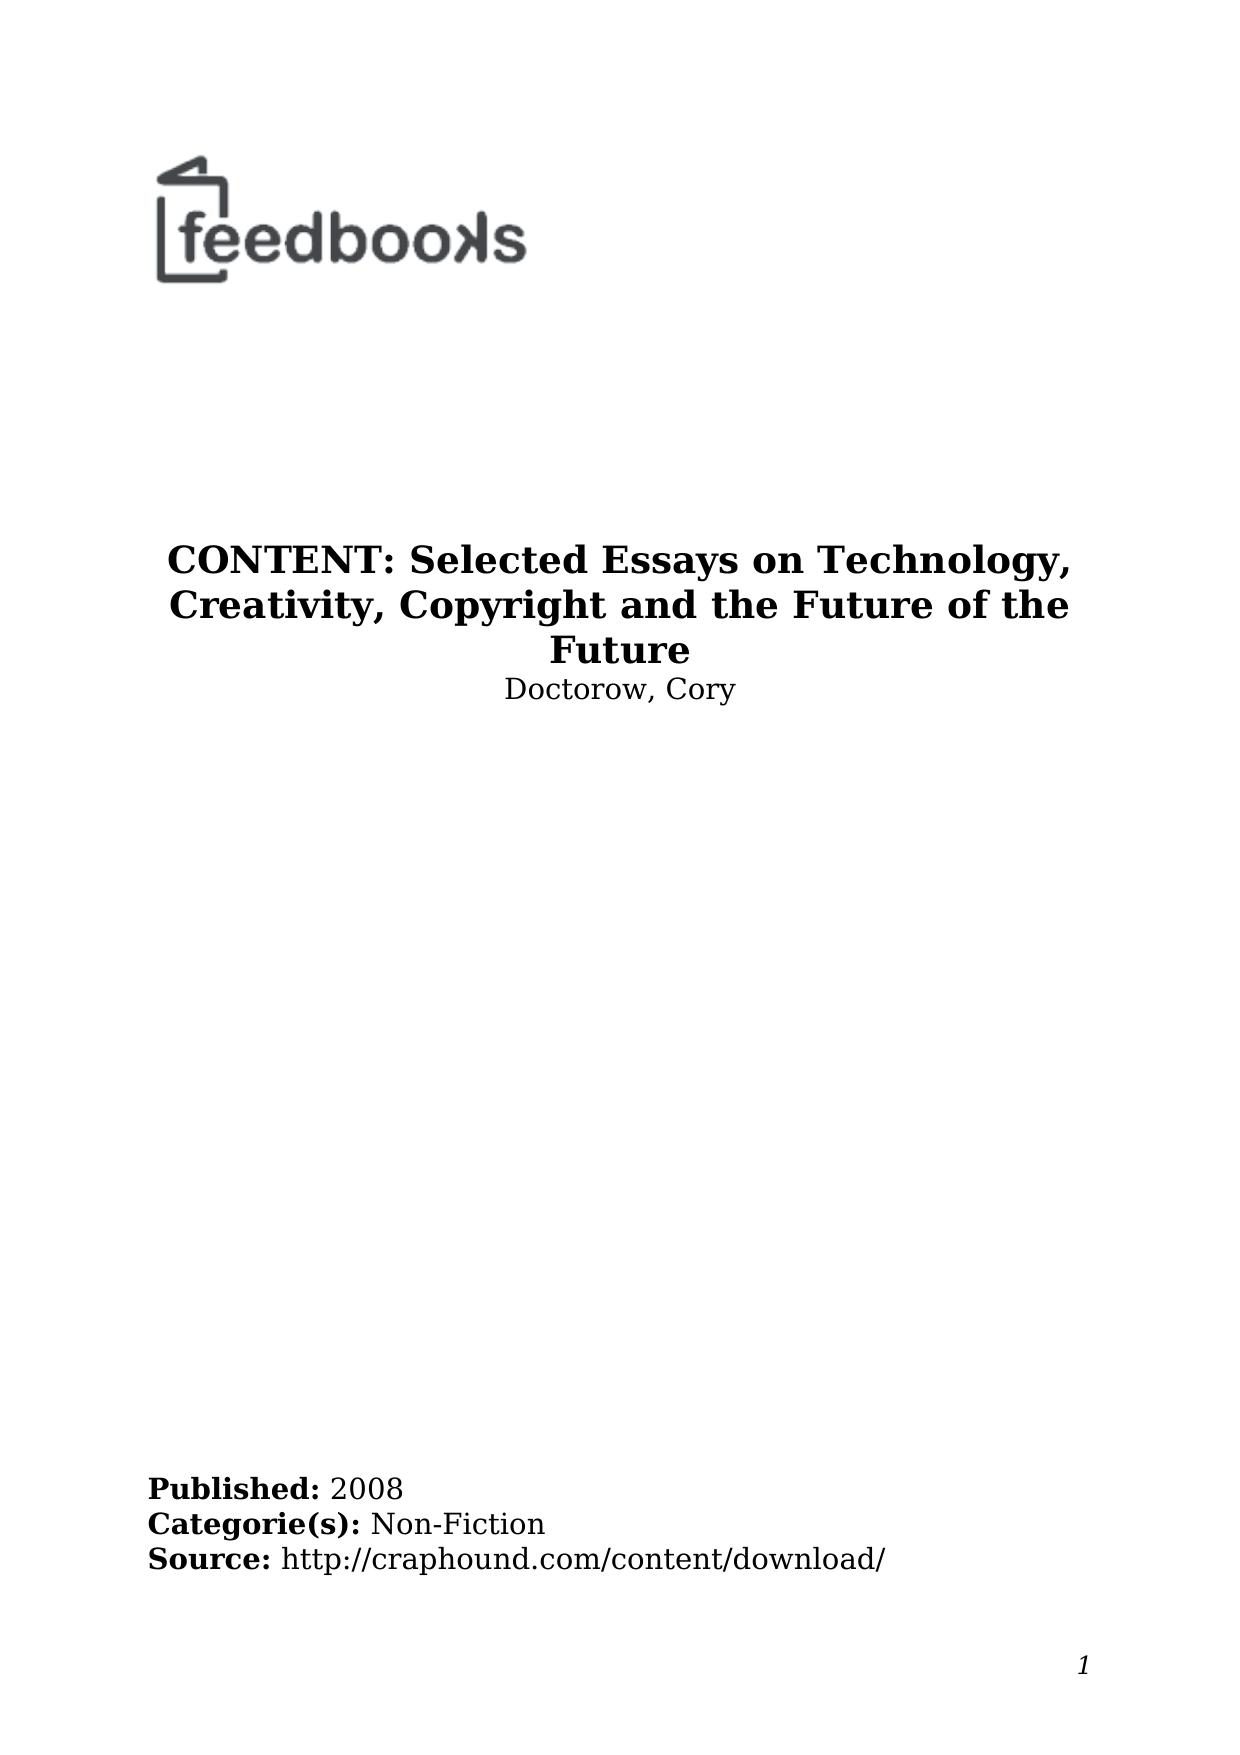 Selected Essays on Technology Creativity